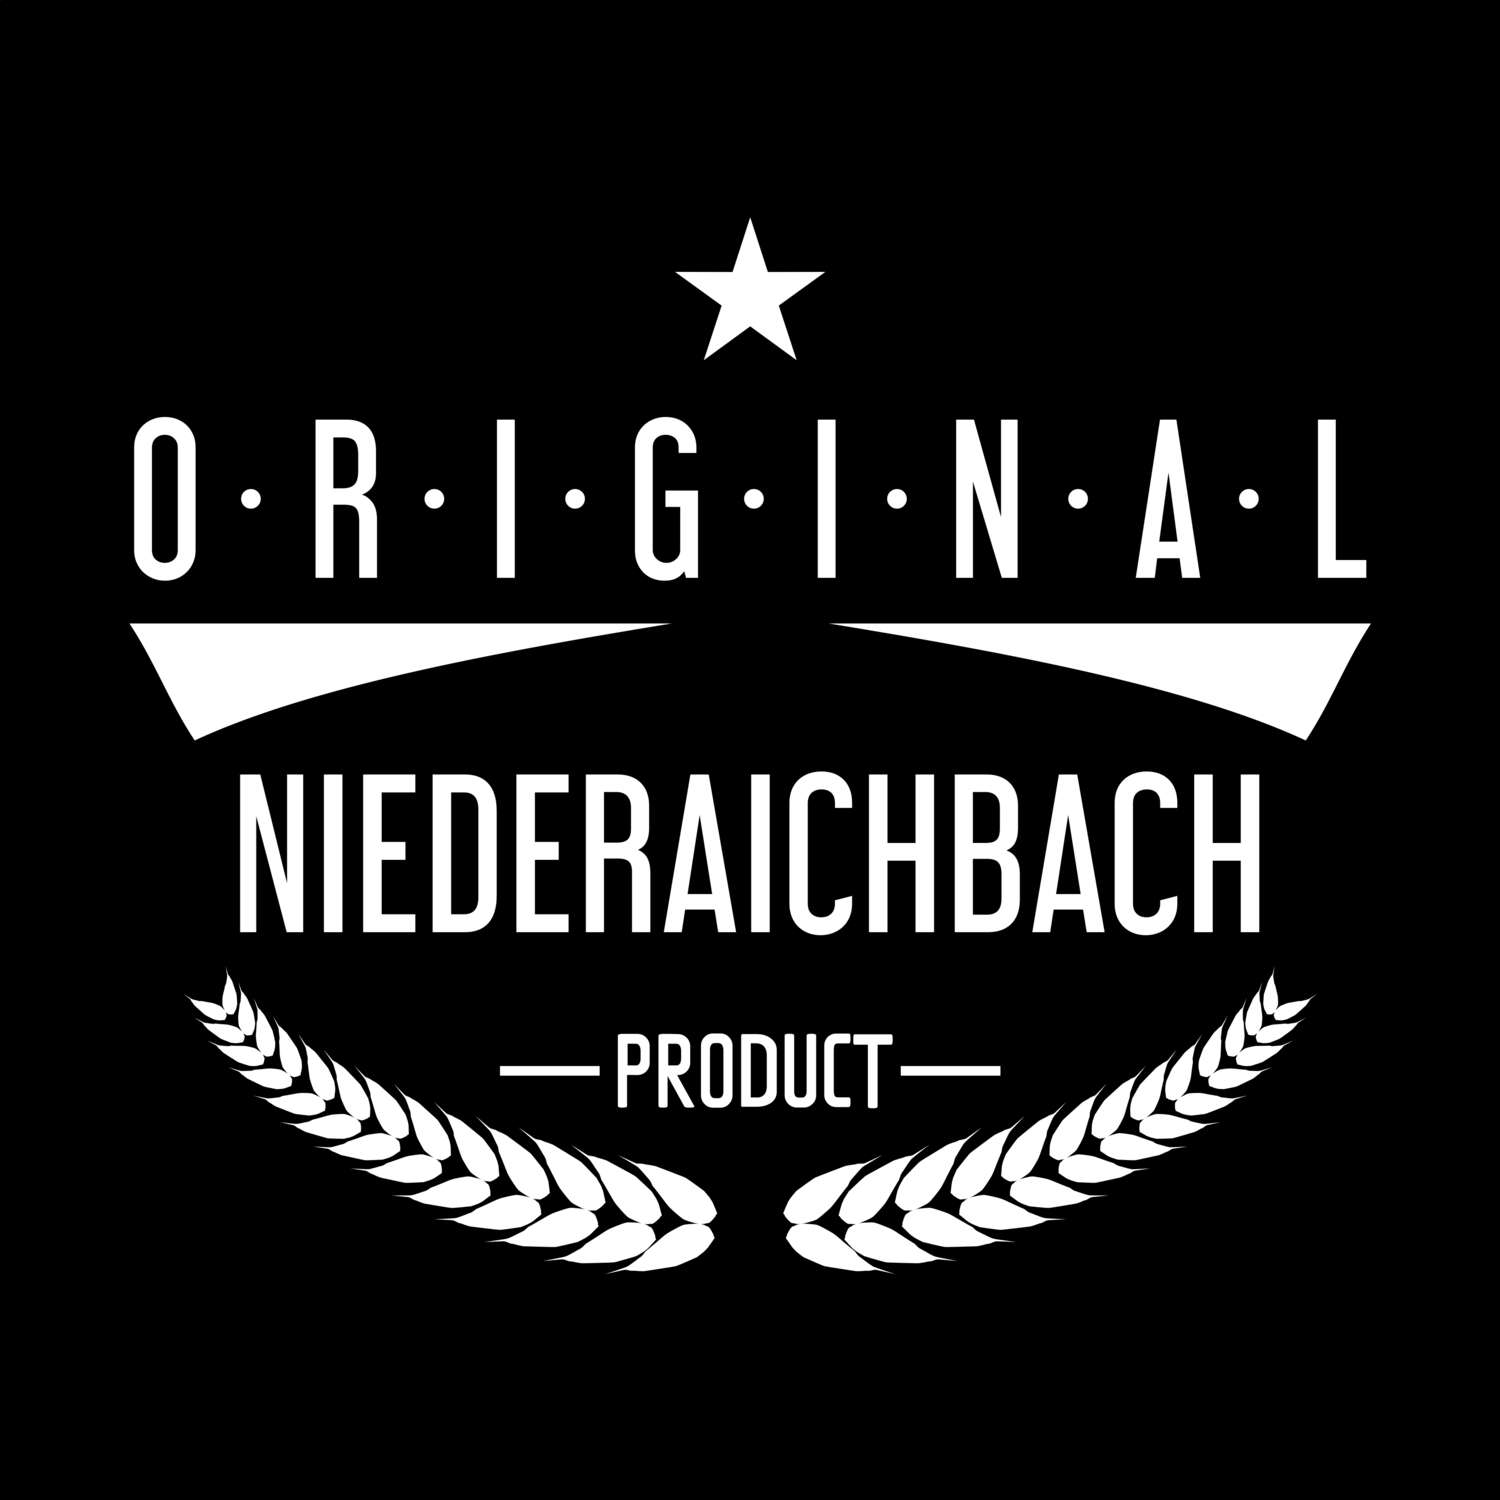 Niederaichbach T-Shirt »Original Product«